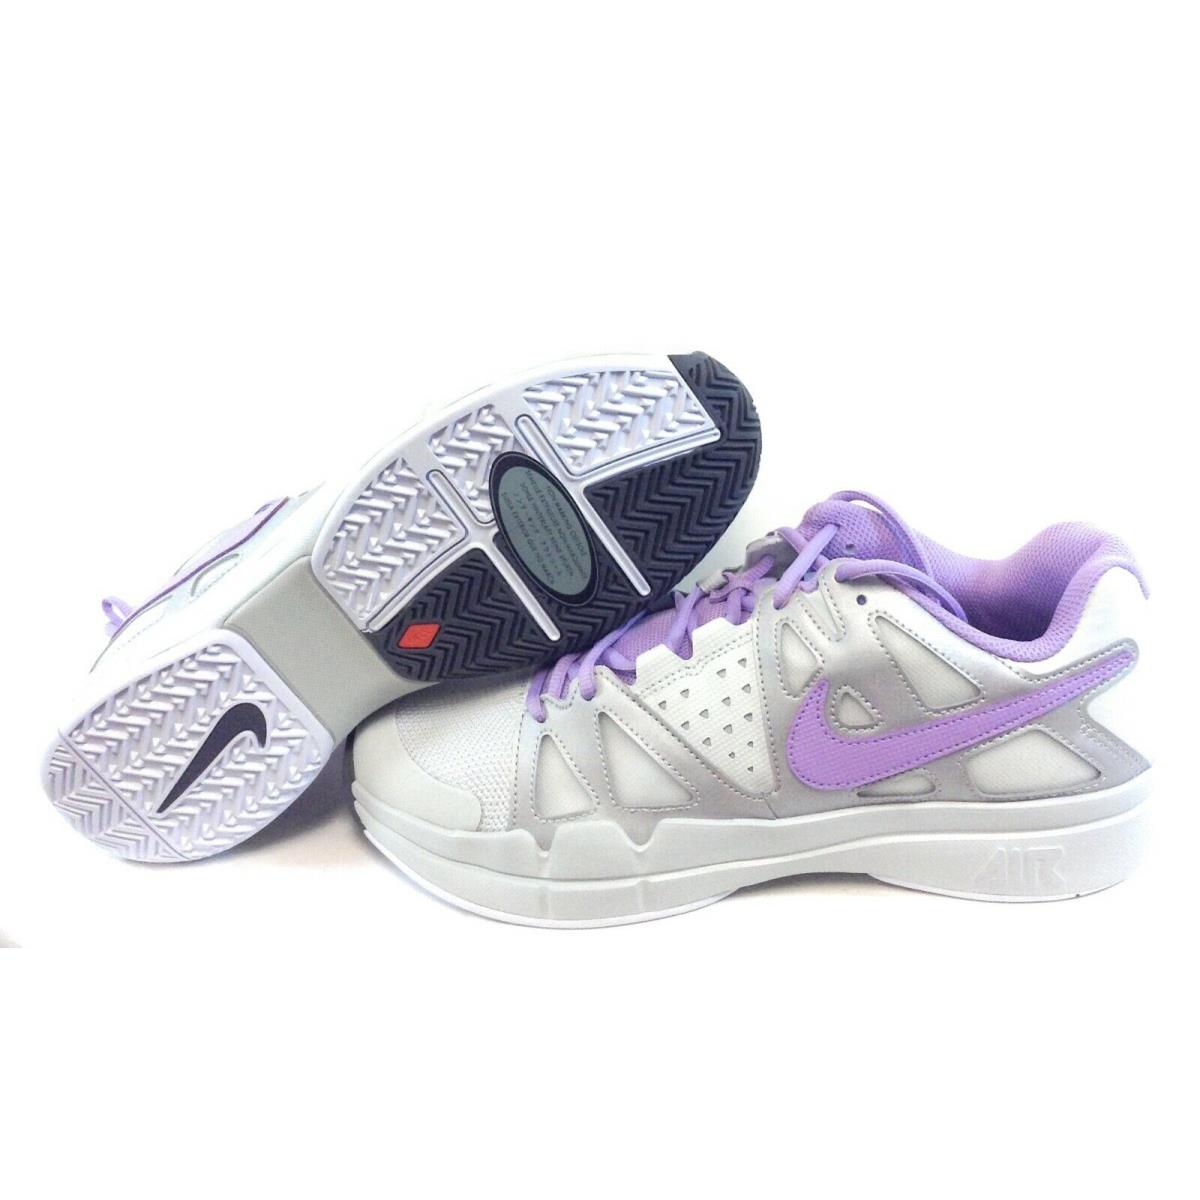 Womens Nike Air Vapor Advantage 599364 059 Grey Violet Tennis Sneakers Shoes